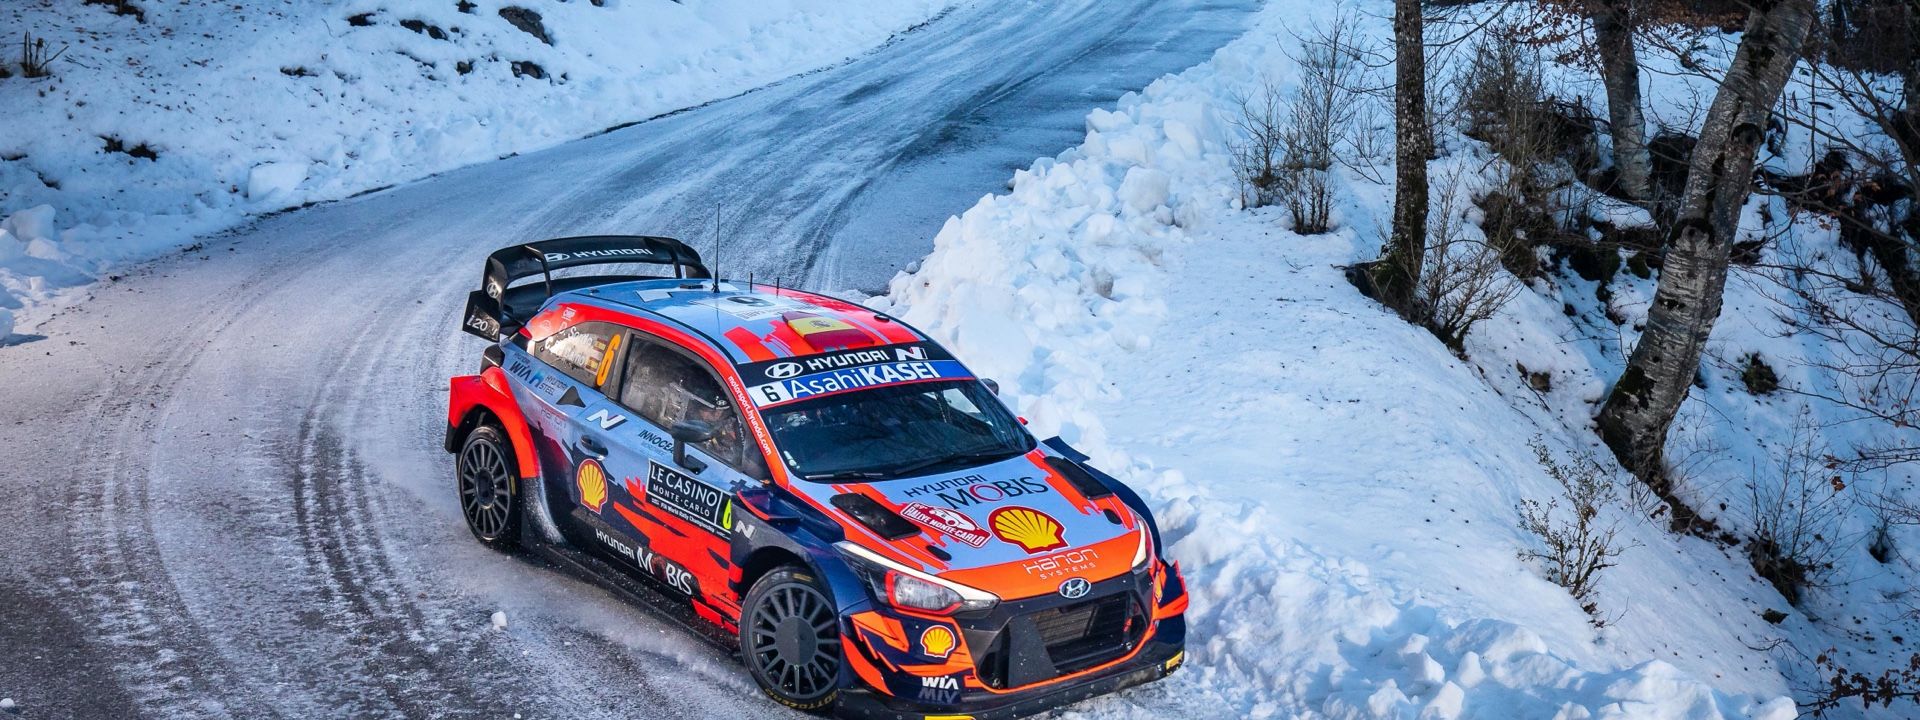 Hyundai_Motorsport_WRC_Rallye-Monte-Carlo-Day-4_2021_header_1920x720.jpg